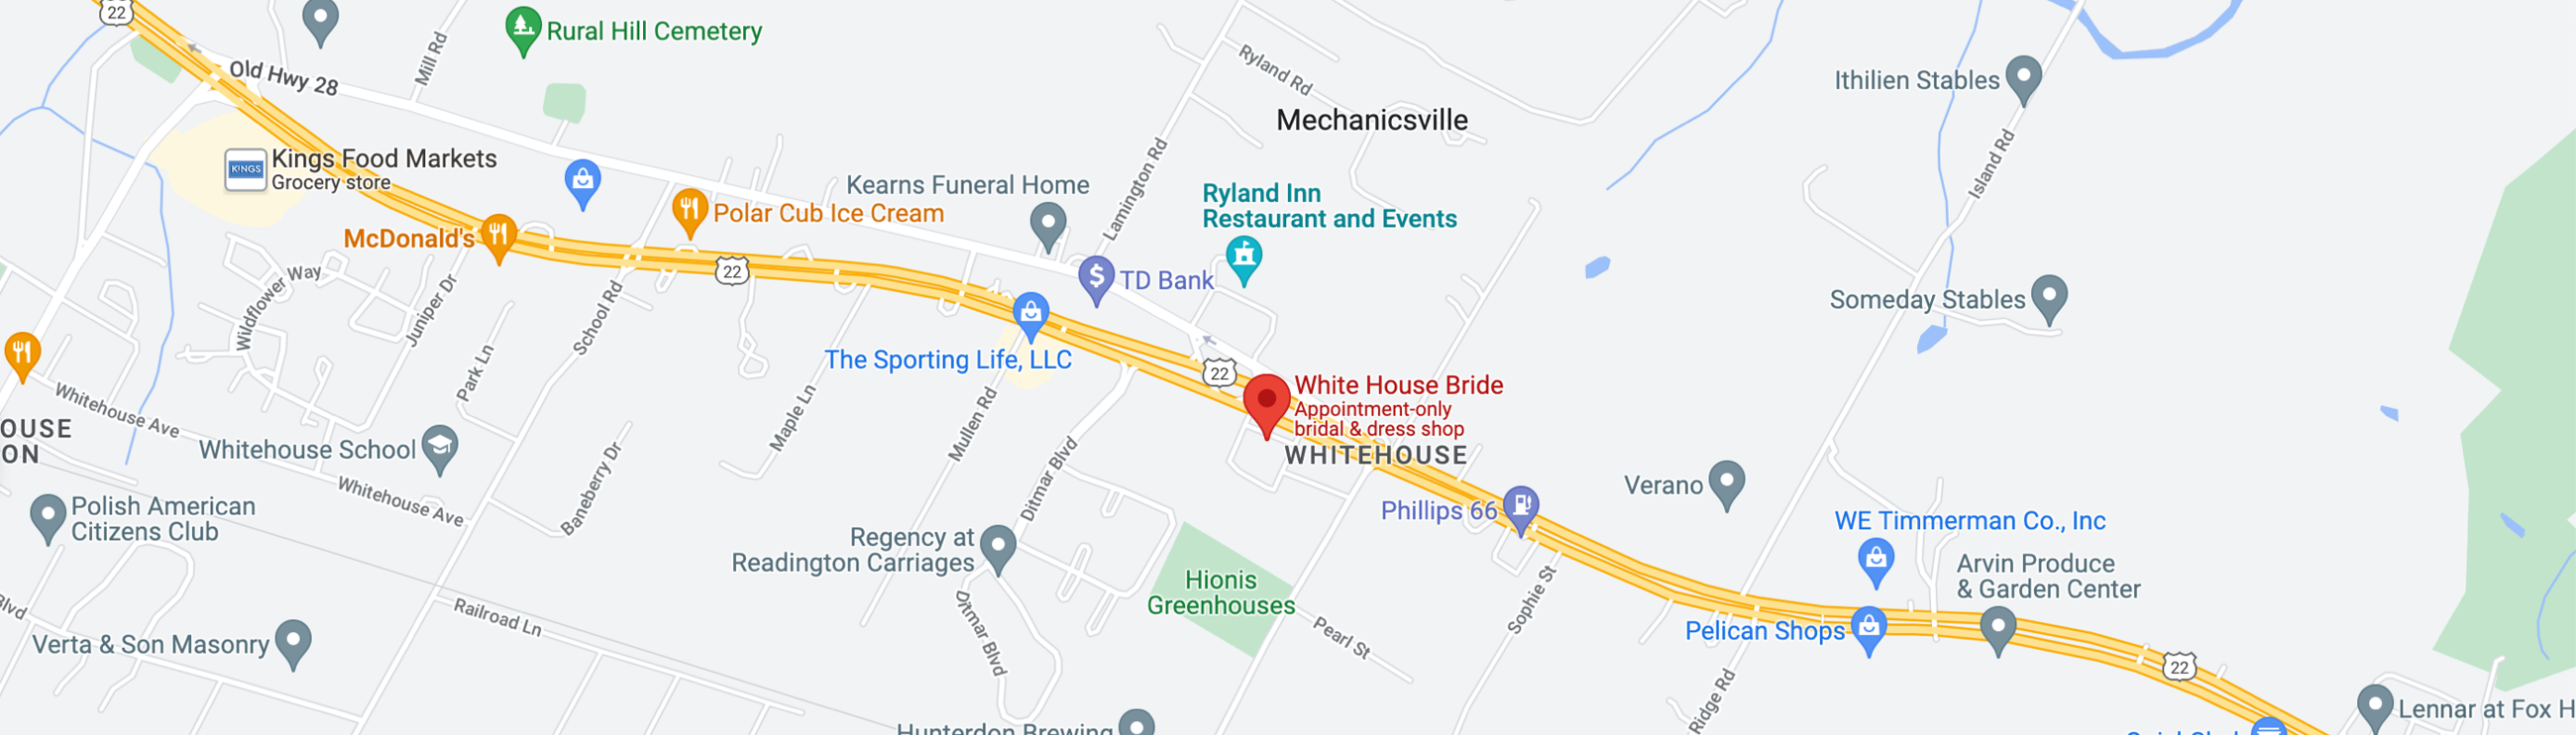 White House Bride location